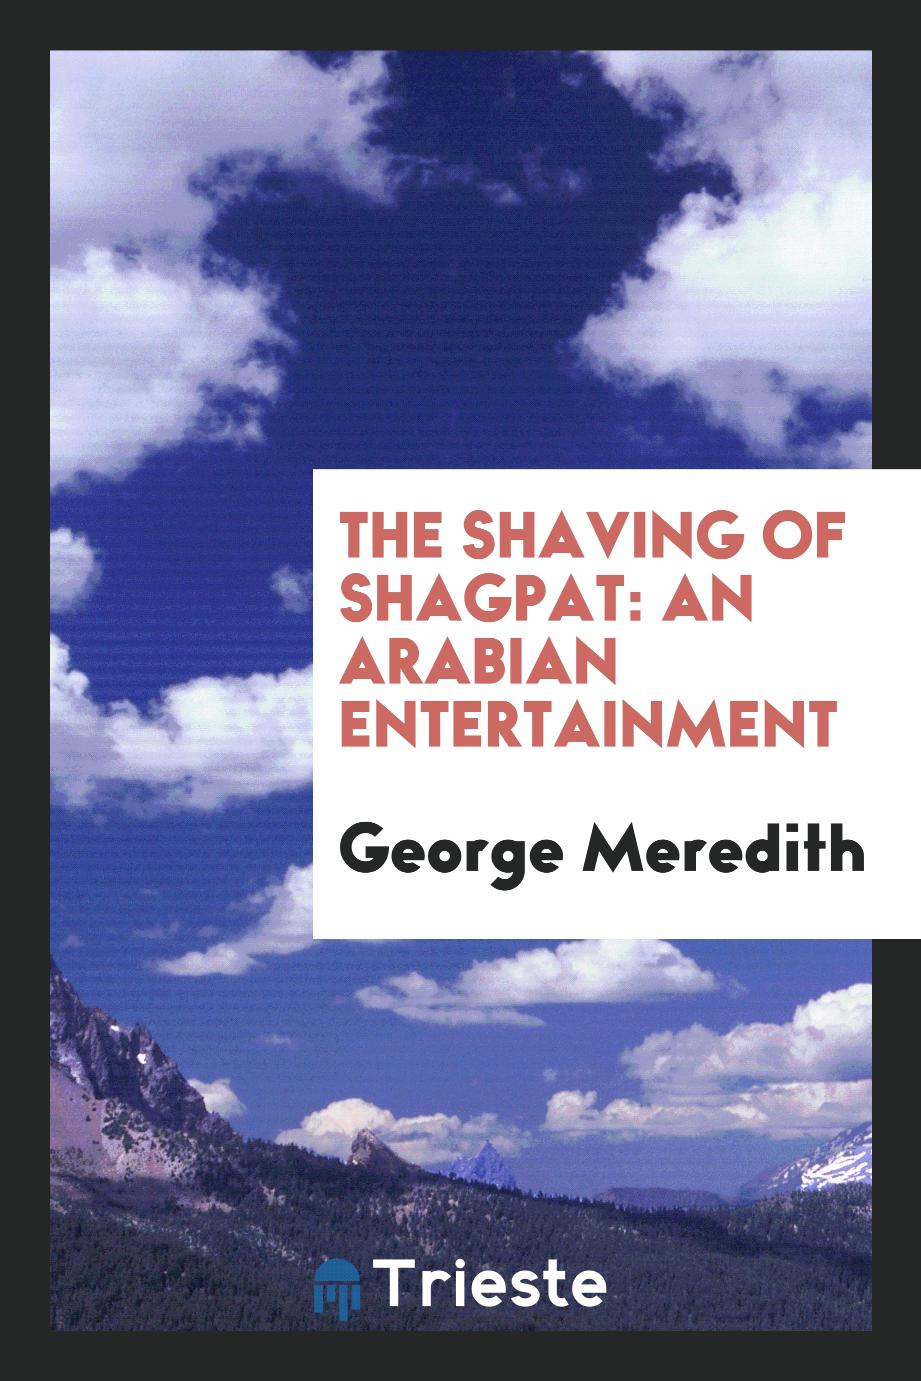 The shaving of Shagpat: an Arabian entertainment